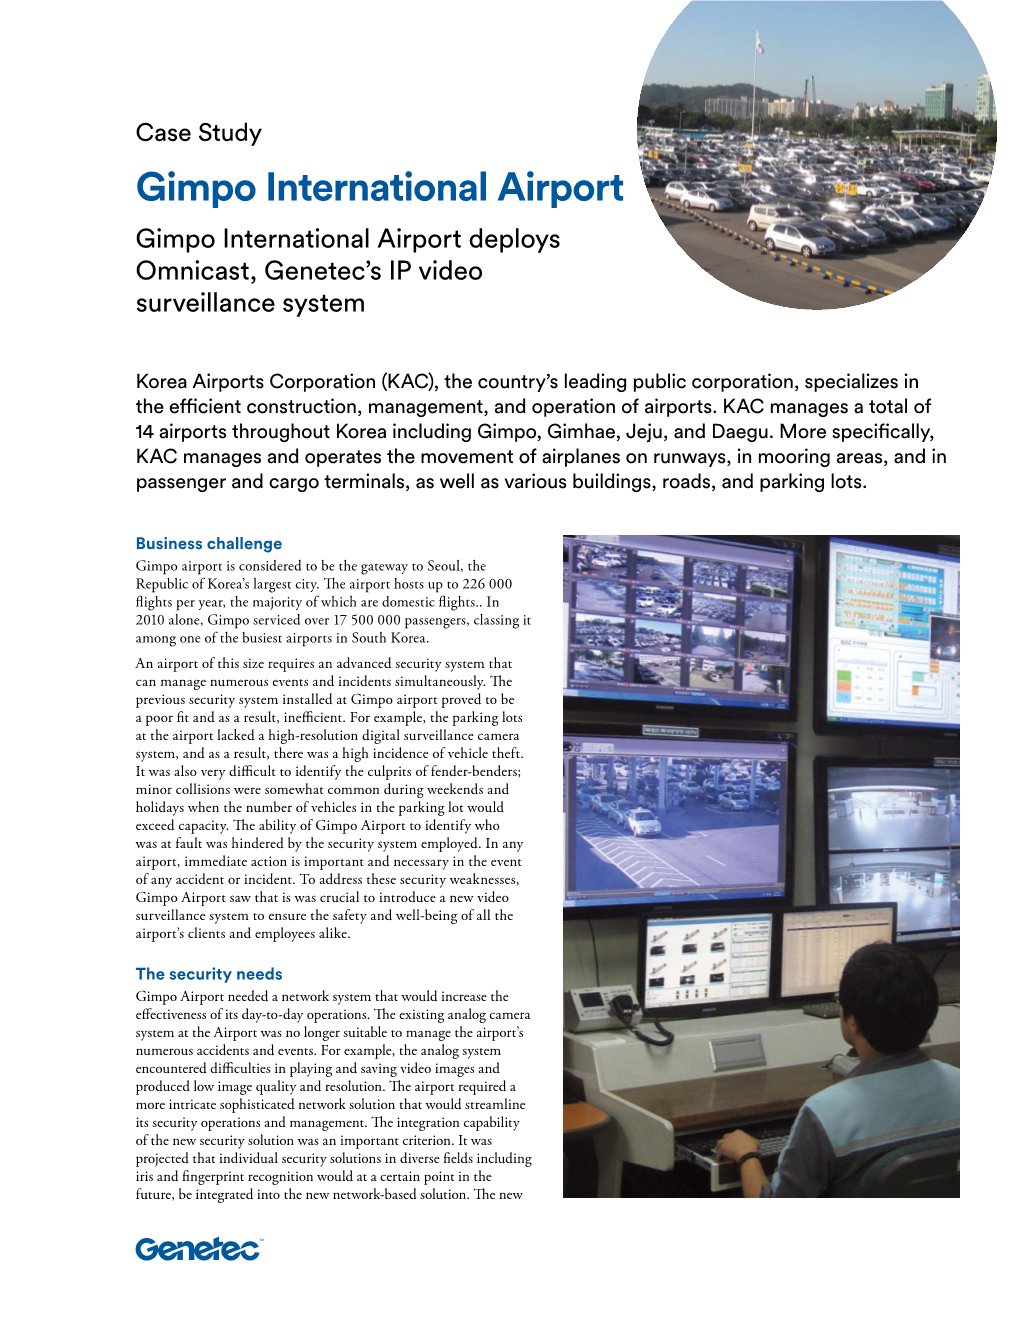 Gimpo International Airport Gimpo International Airport Deploys Omnicast, Genetec’S IP Video Surveillance System